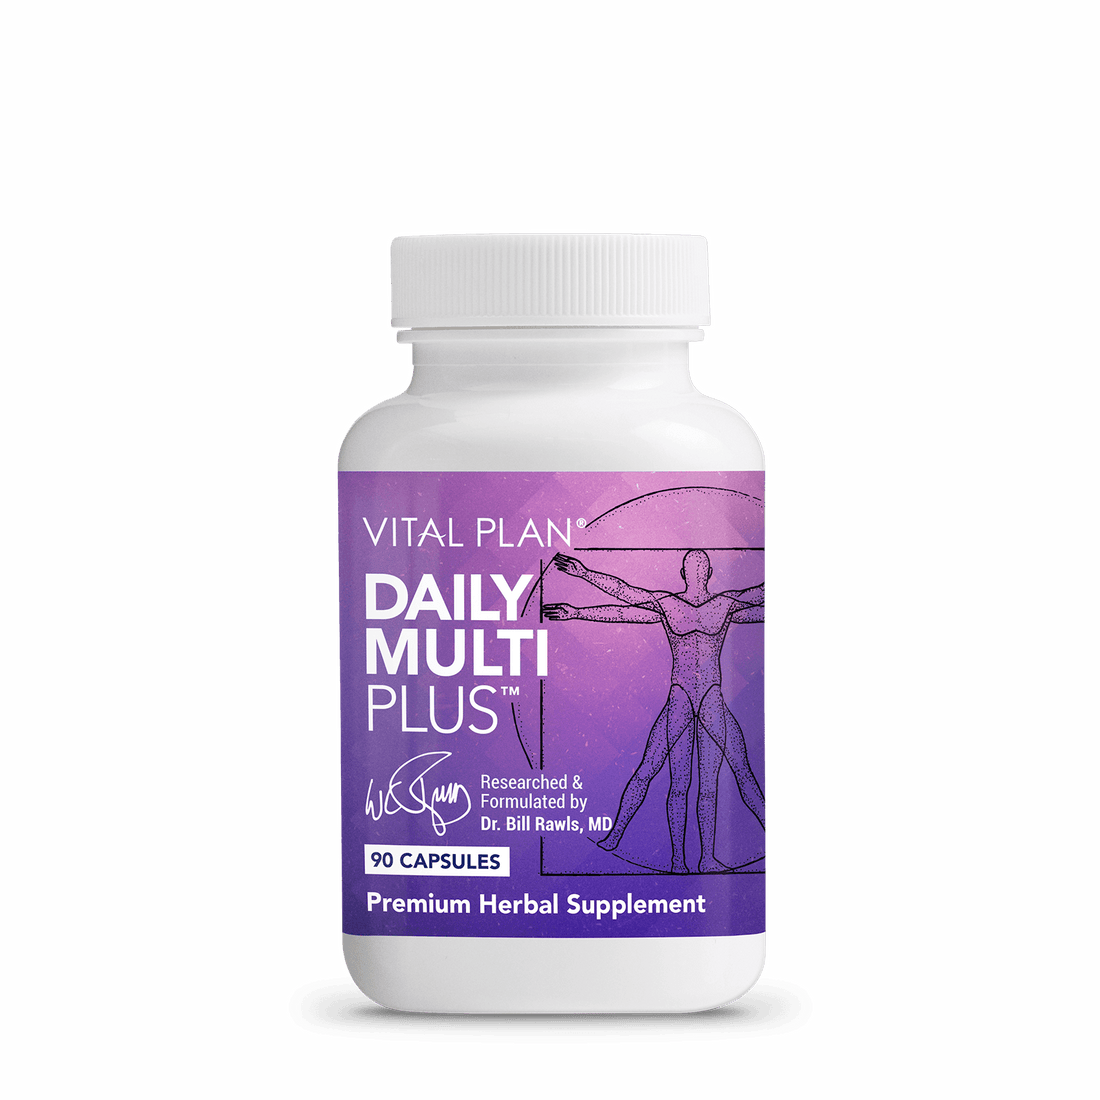 Daily Multi Plus - Vital Plan